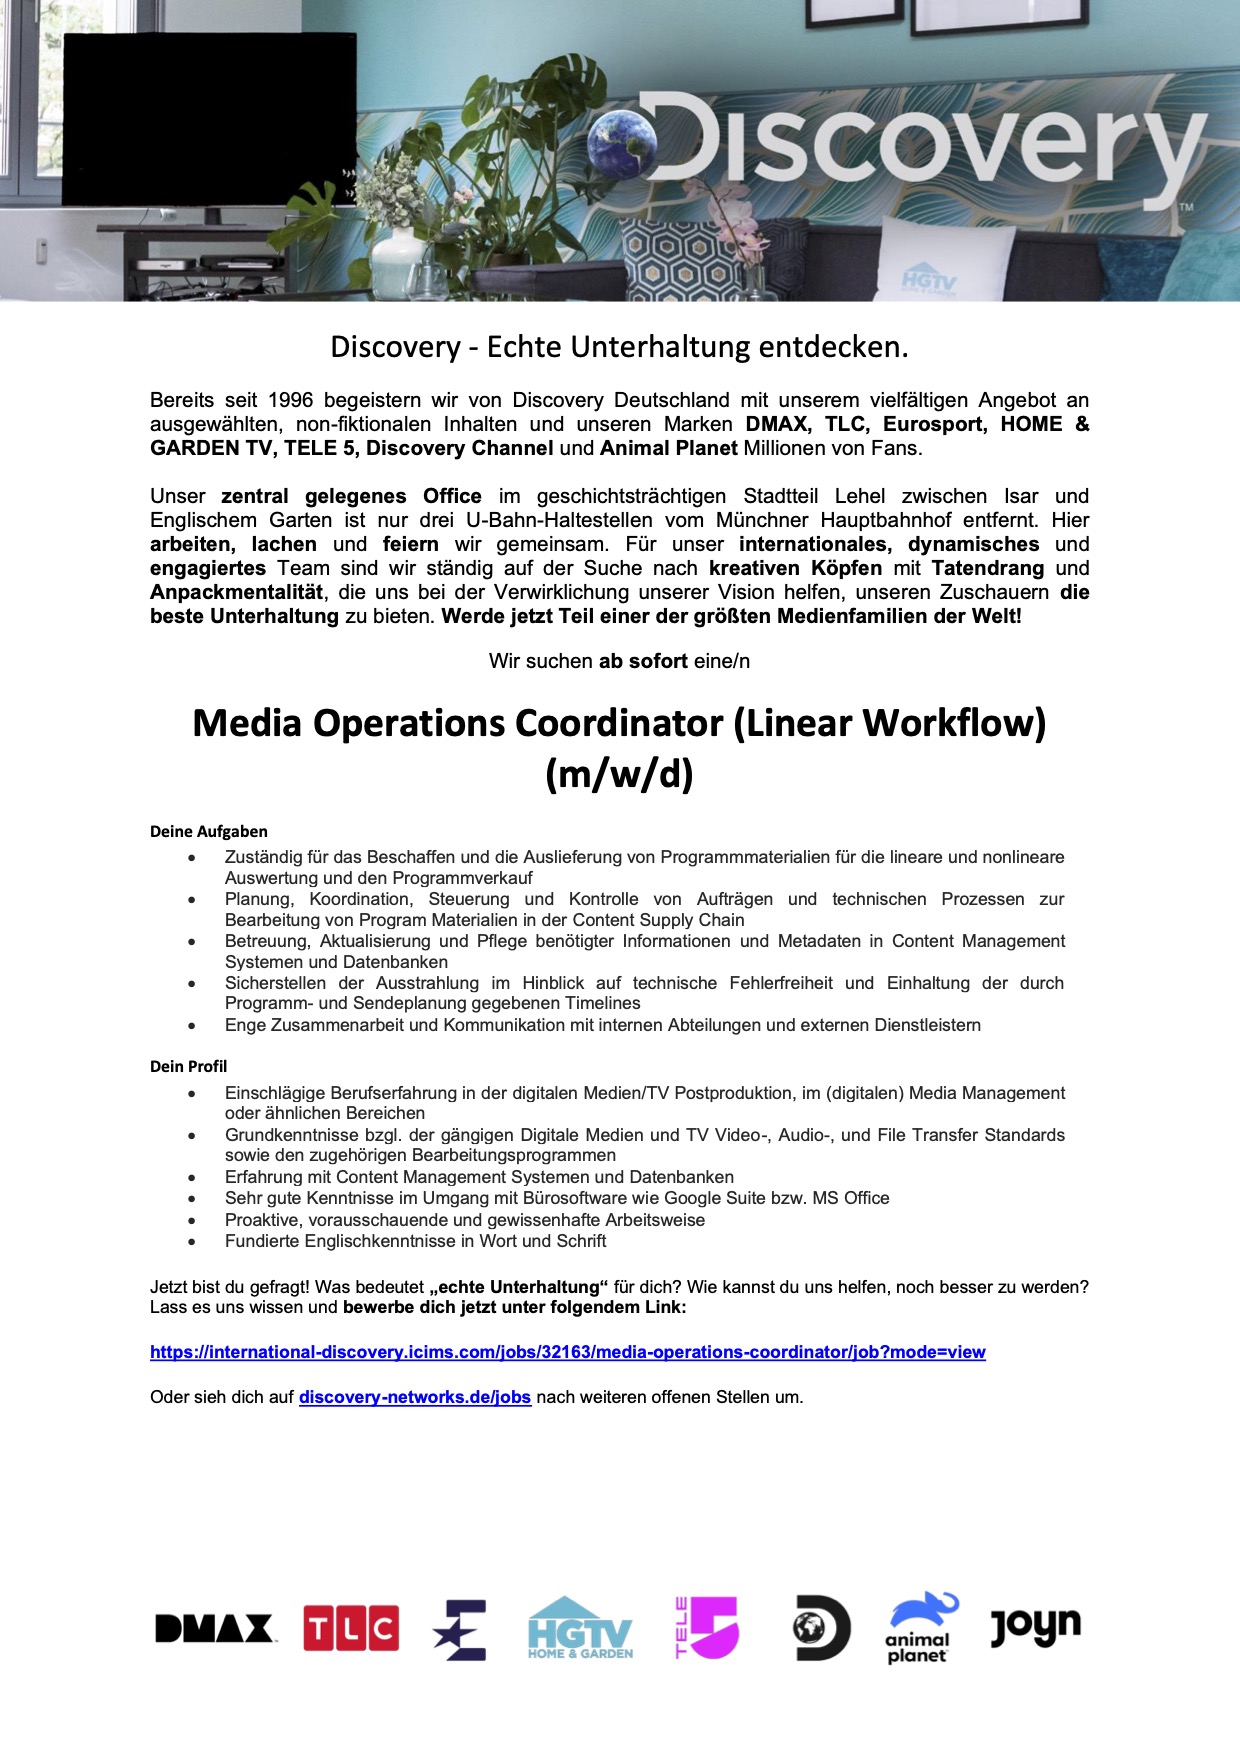 Media Operations Coordinator (Linear Workflow) (m/w/d)